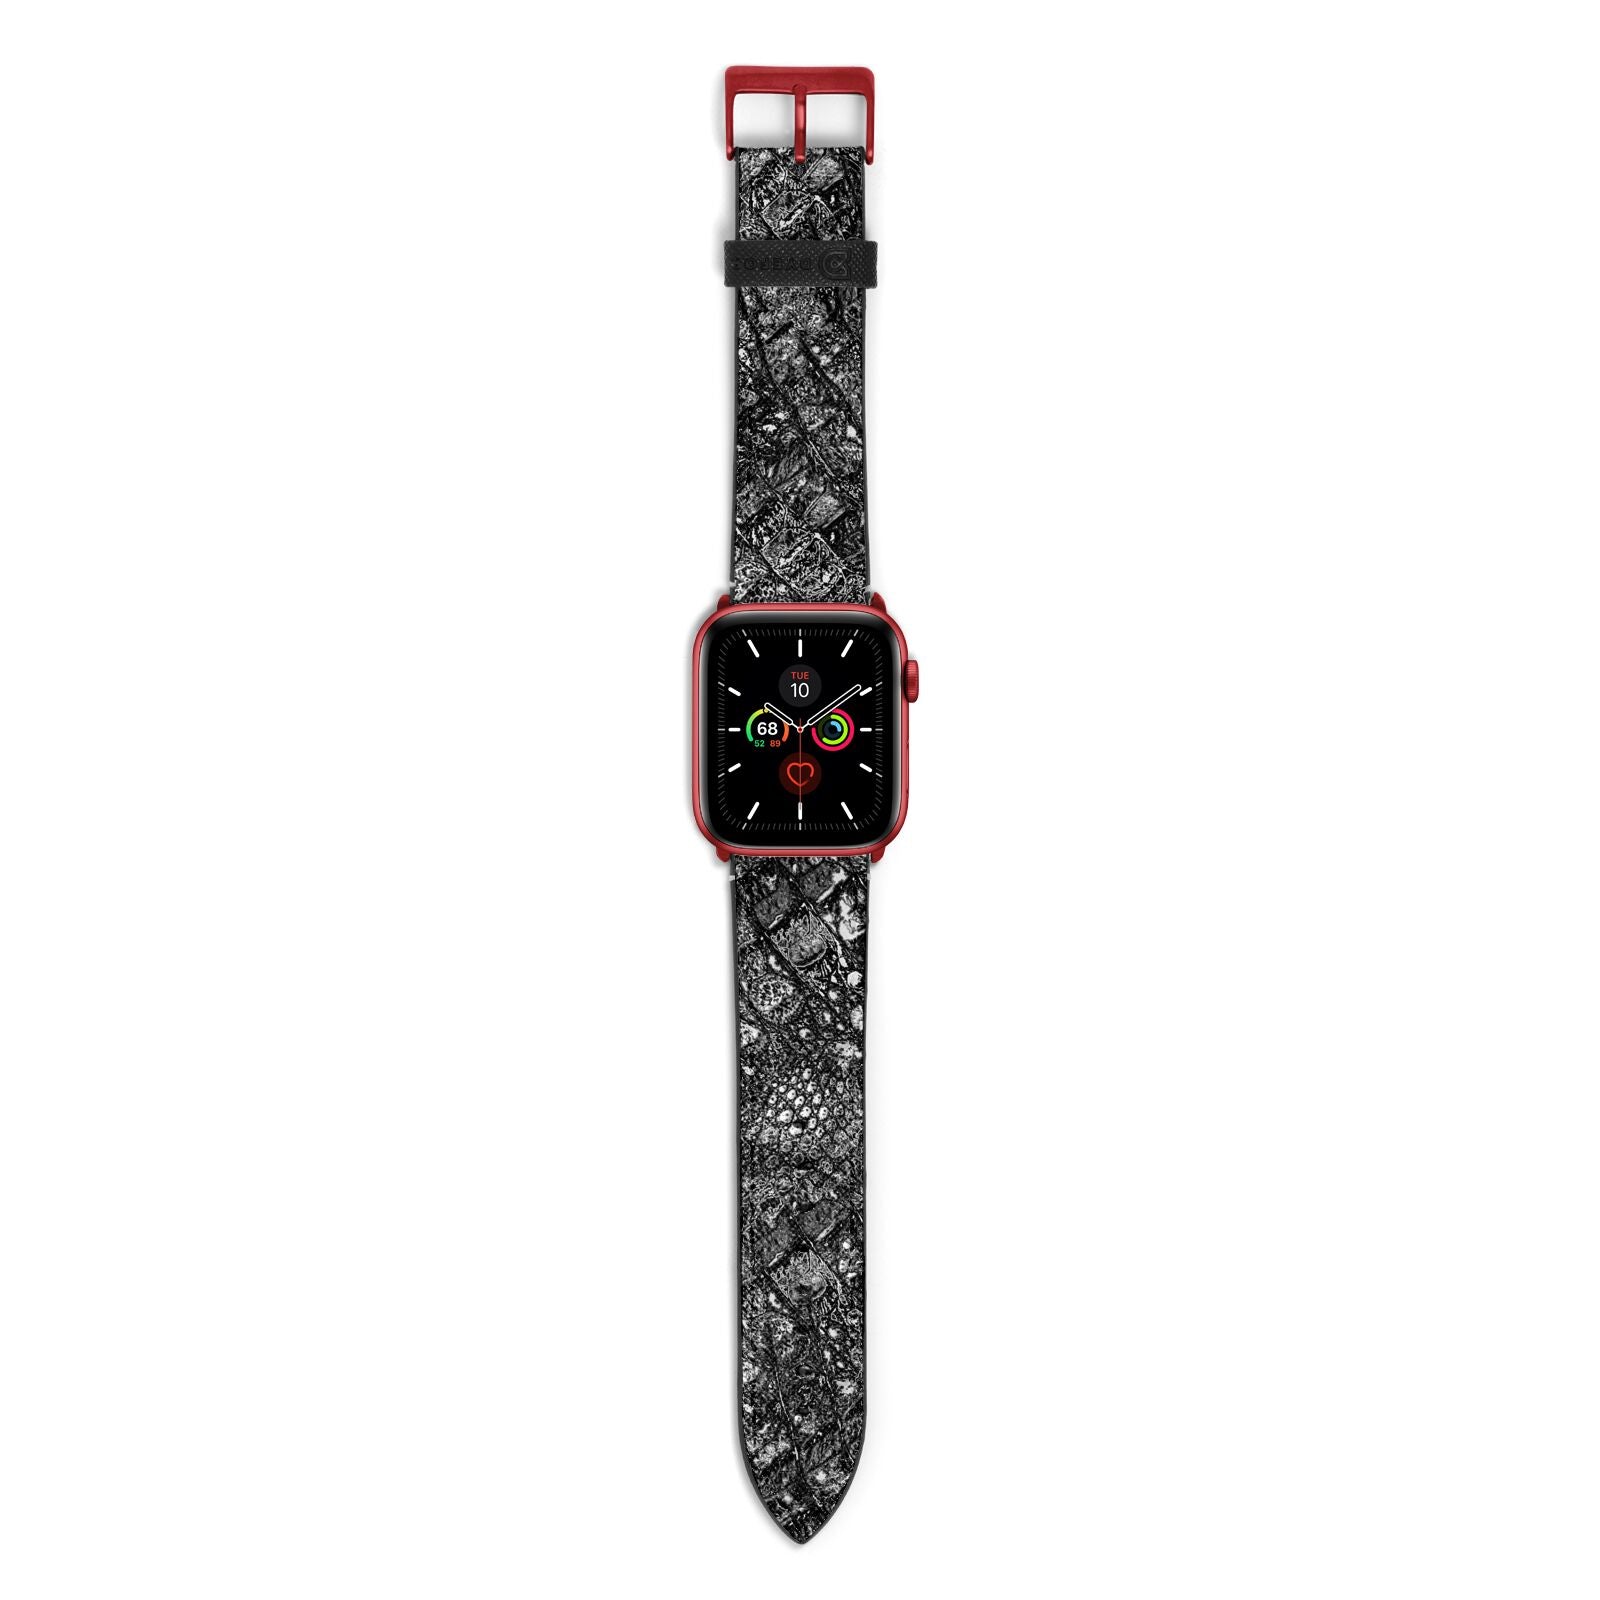 Snakeskin Design Apple Watch Strap with Red Hardware